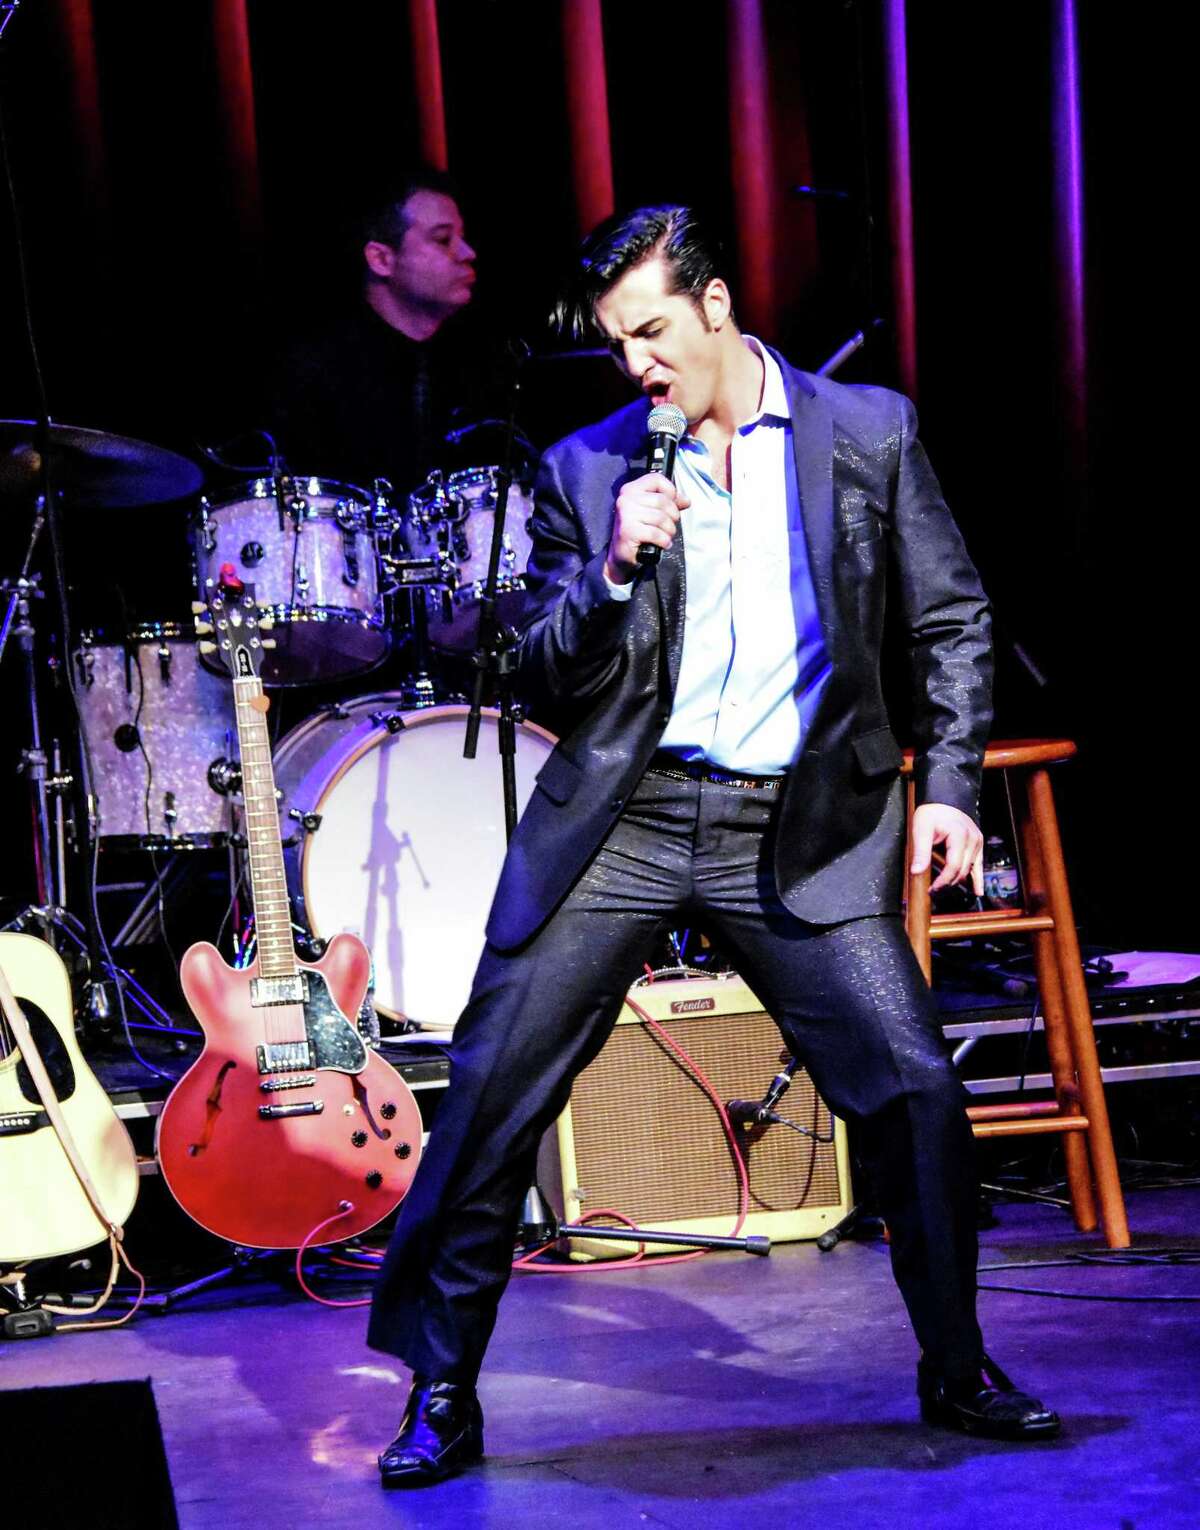 Goodspeed Musicals in association with Artists Lounge Live present “Elvis My Way” starring Brandon Bennett.